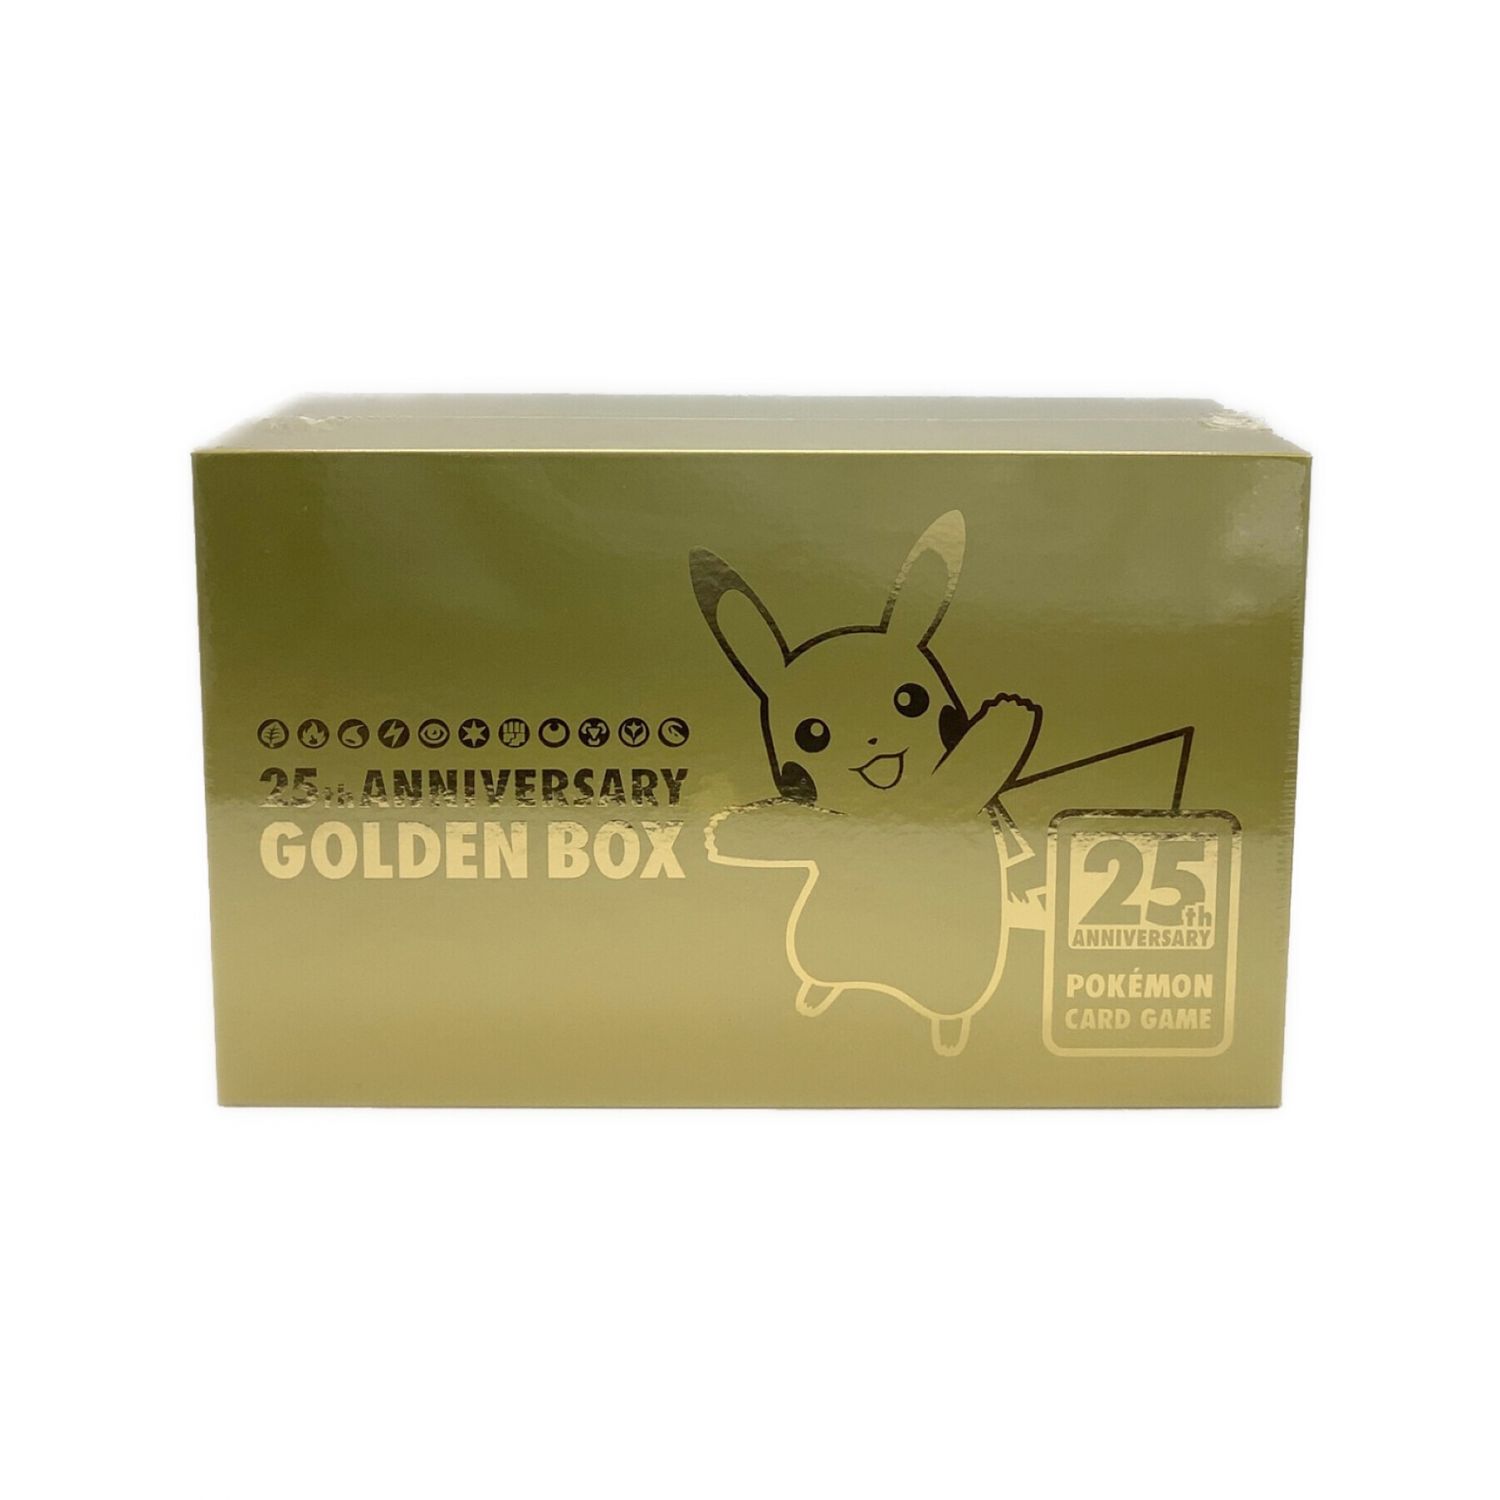 25th ANNIVERSARY GOLDEN BOX｜トレファクONLINE